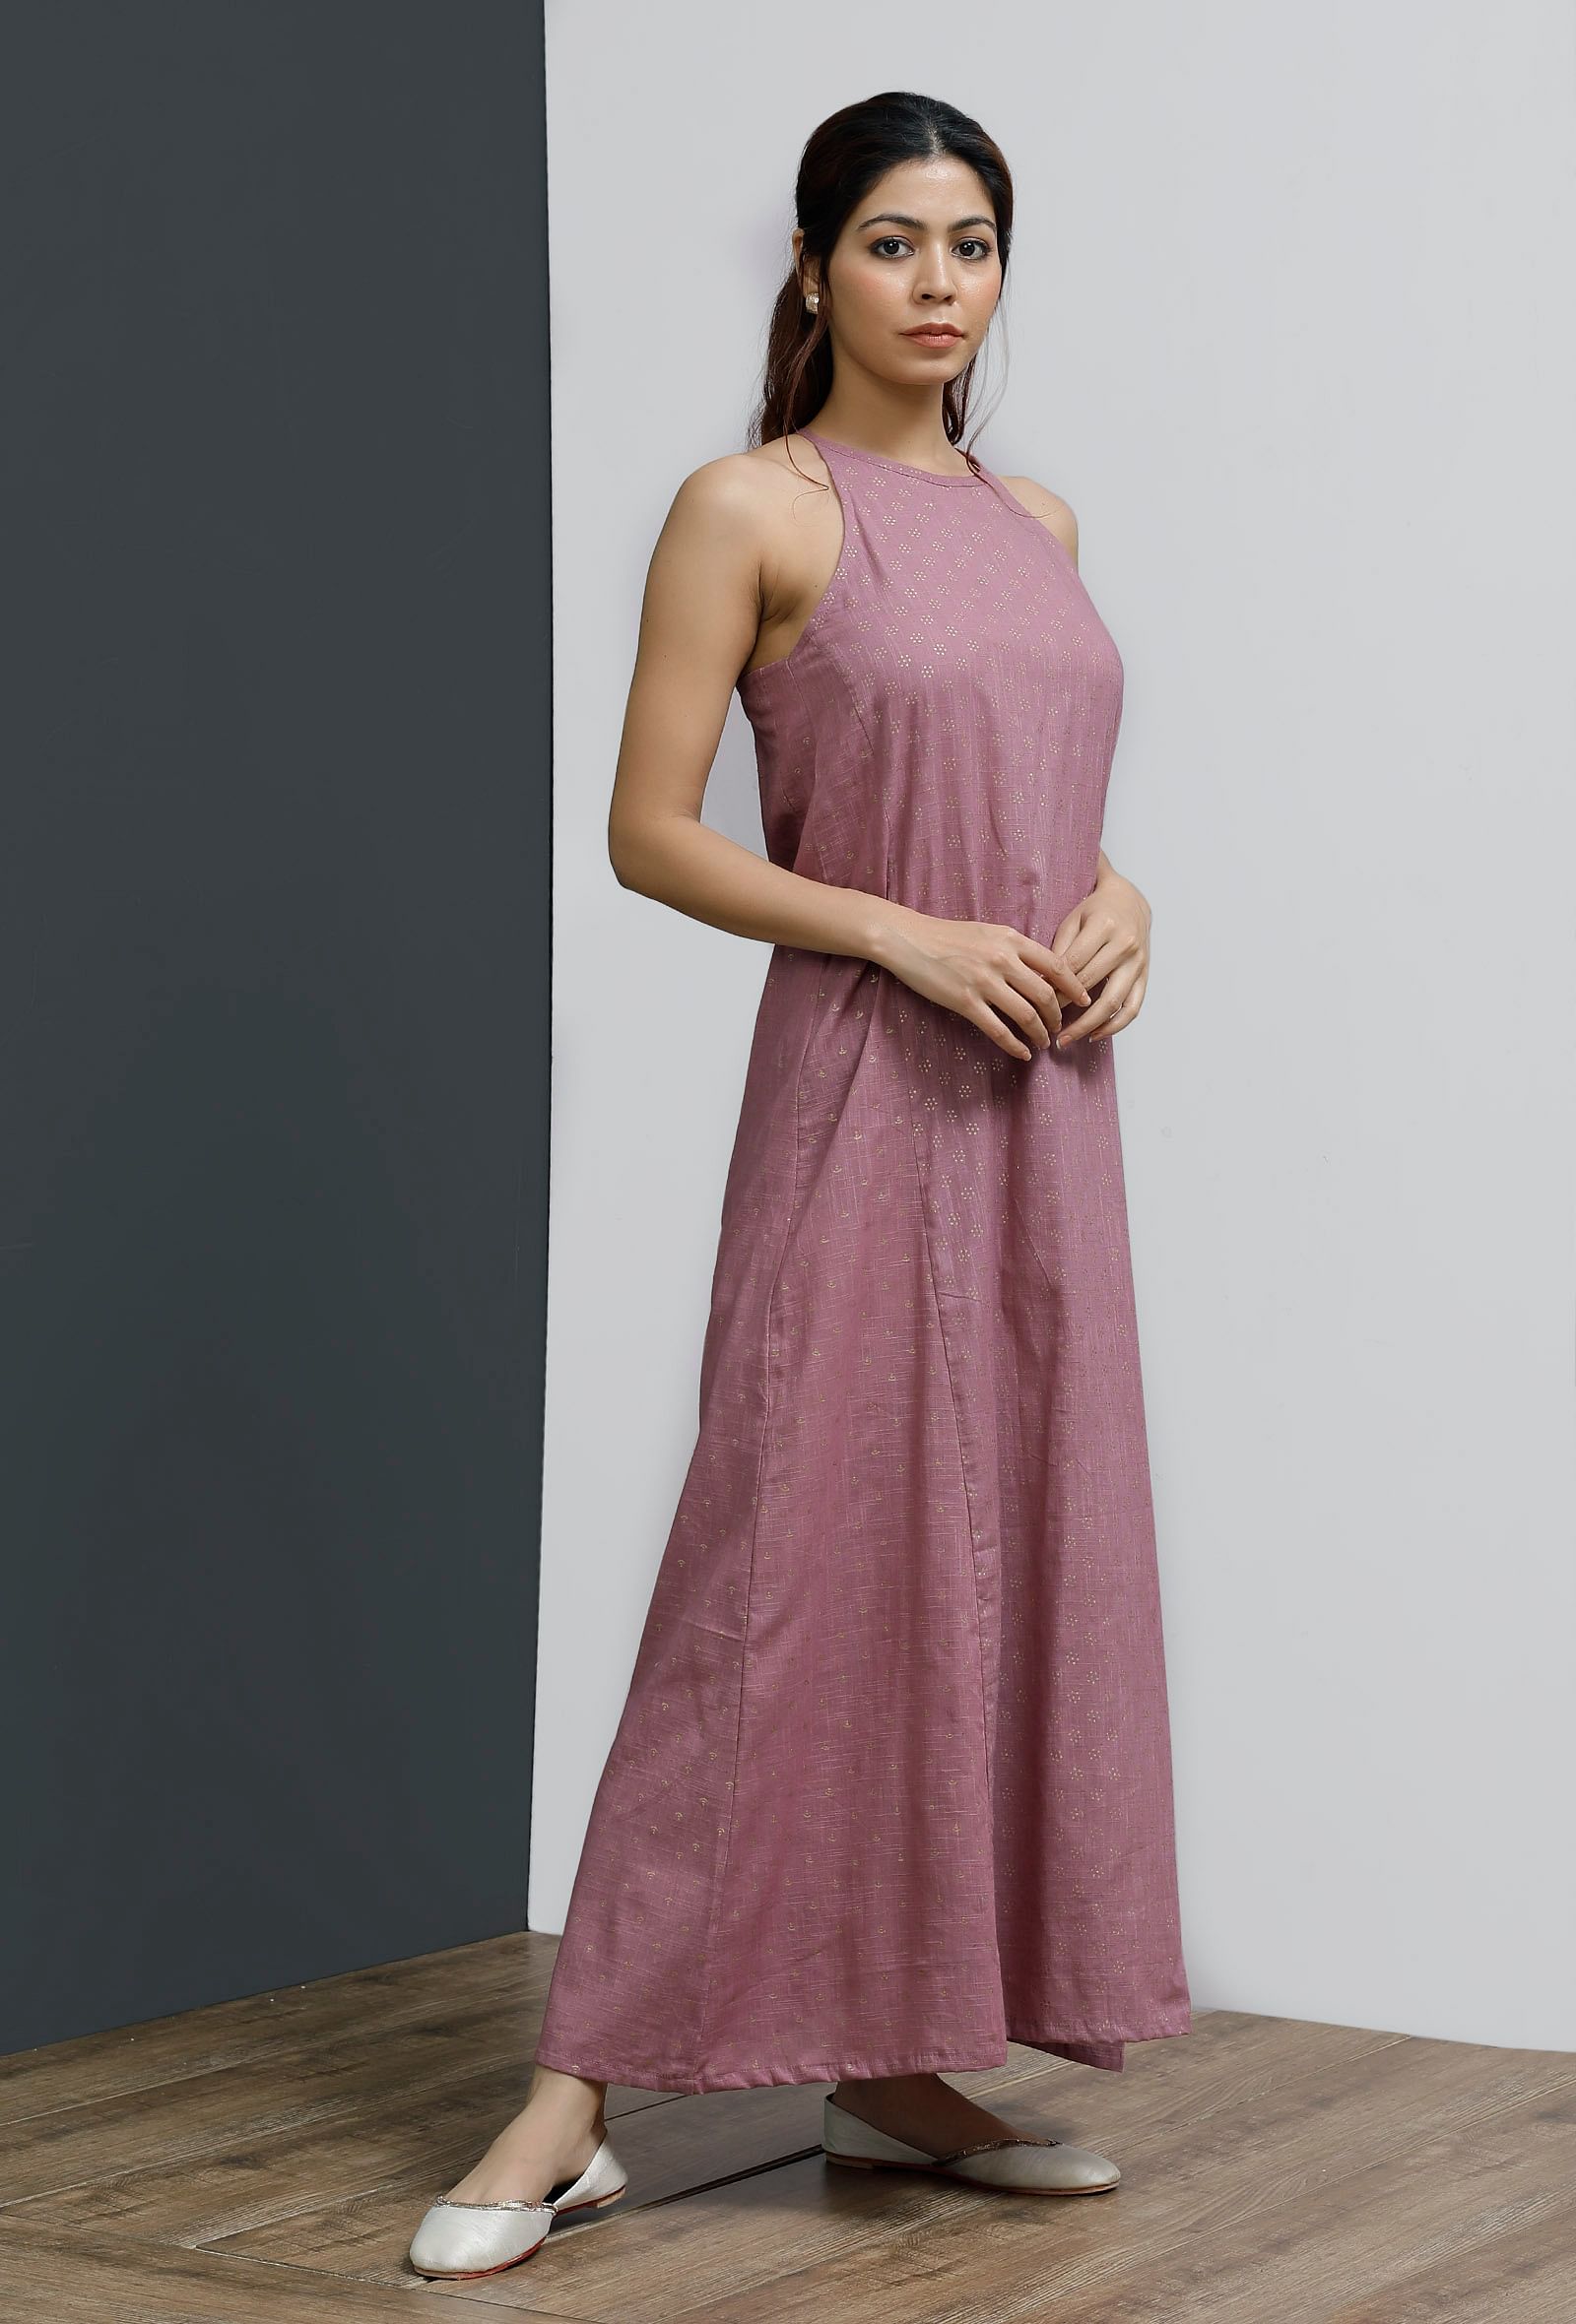 Wedding Season In Net Fabric Indo Western Dress Onion Pink Color